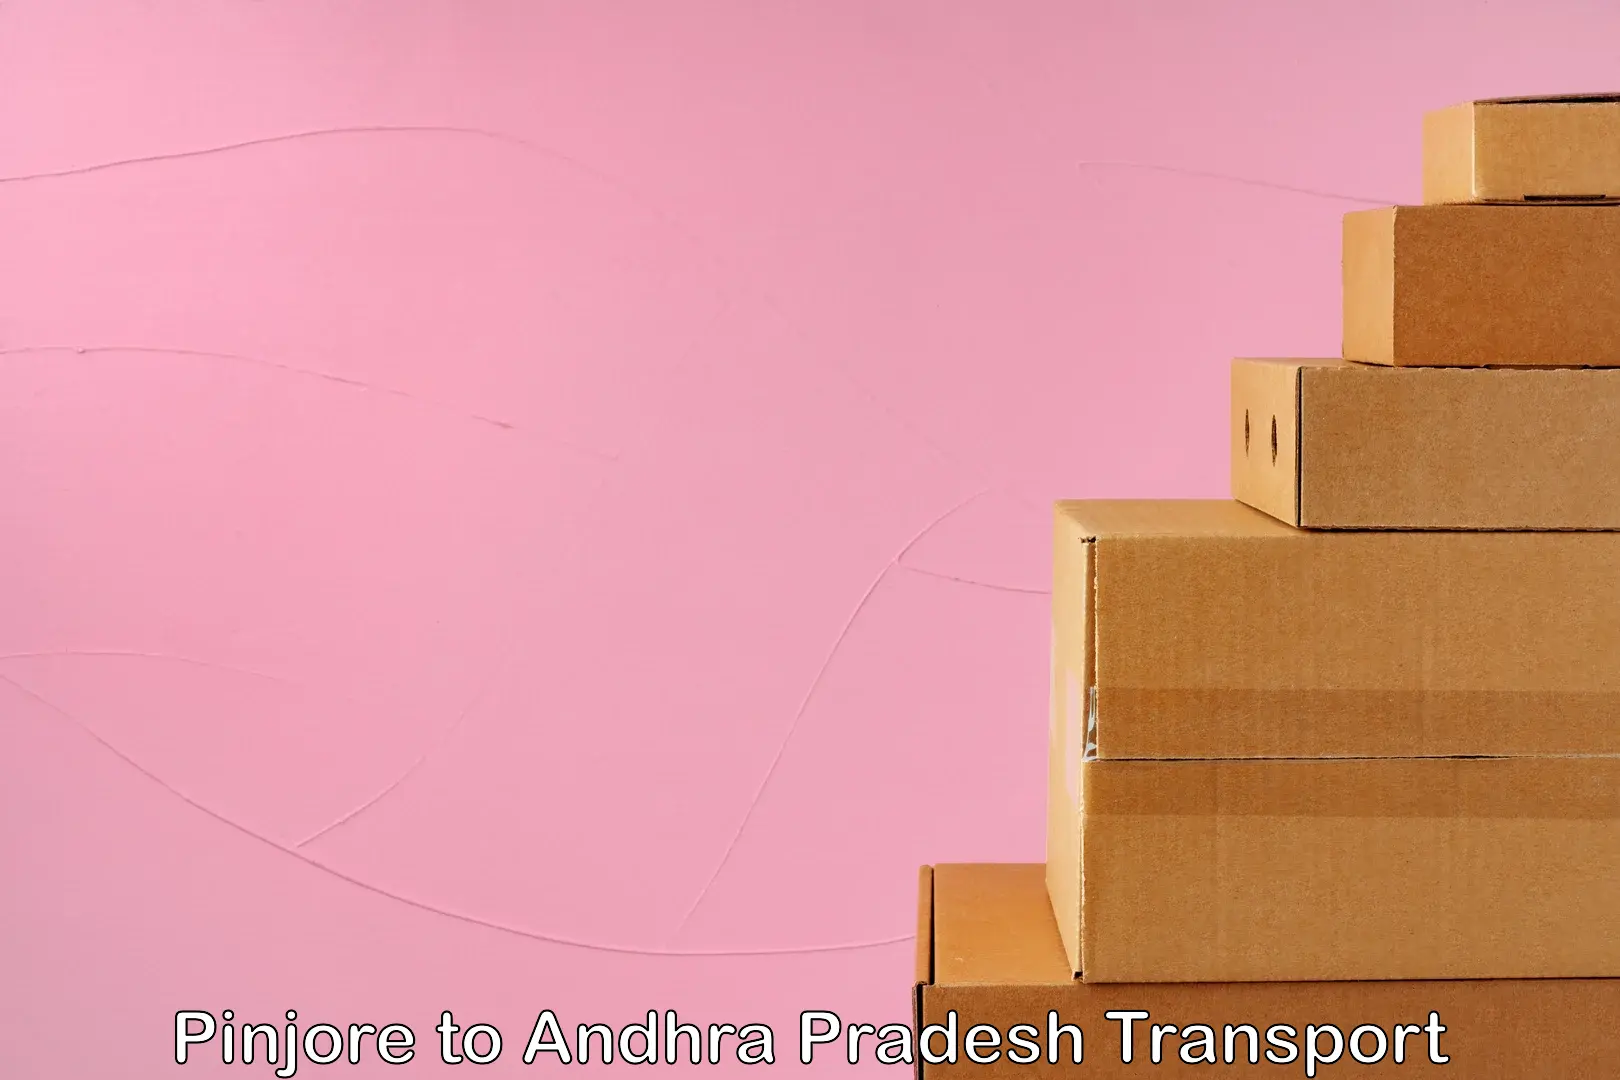 Sending bike to another city Pinjore to Andhra Pradesh